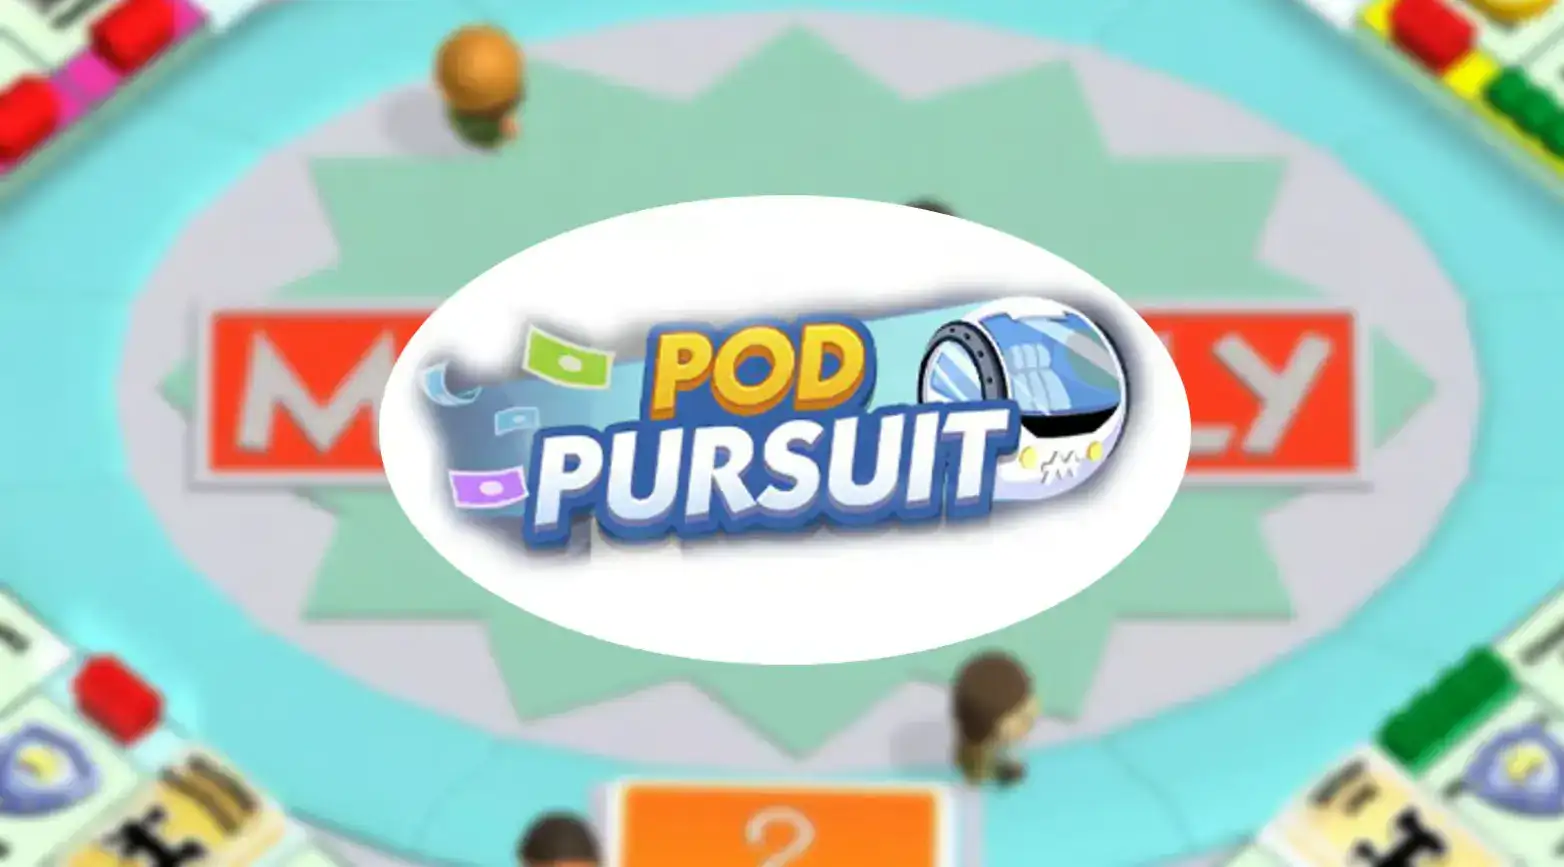 monopoly go pod pursuit rewards and milestones